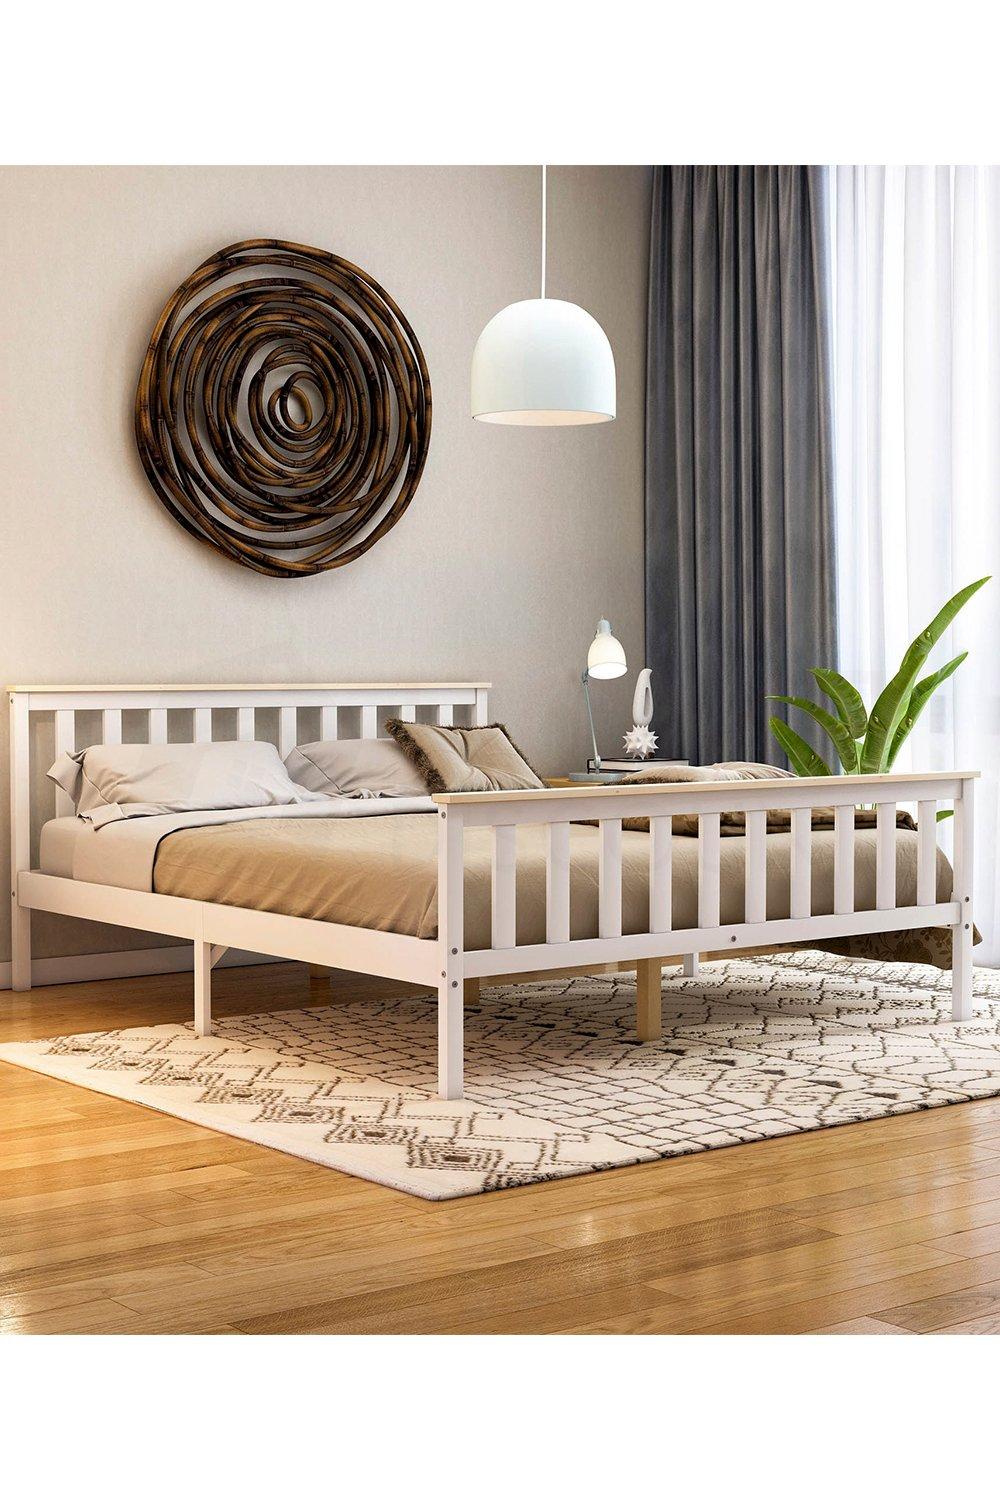 Vida Designs Milan King Size Wooden Bed High Foot 820 x 1595 x 2050 mm